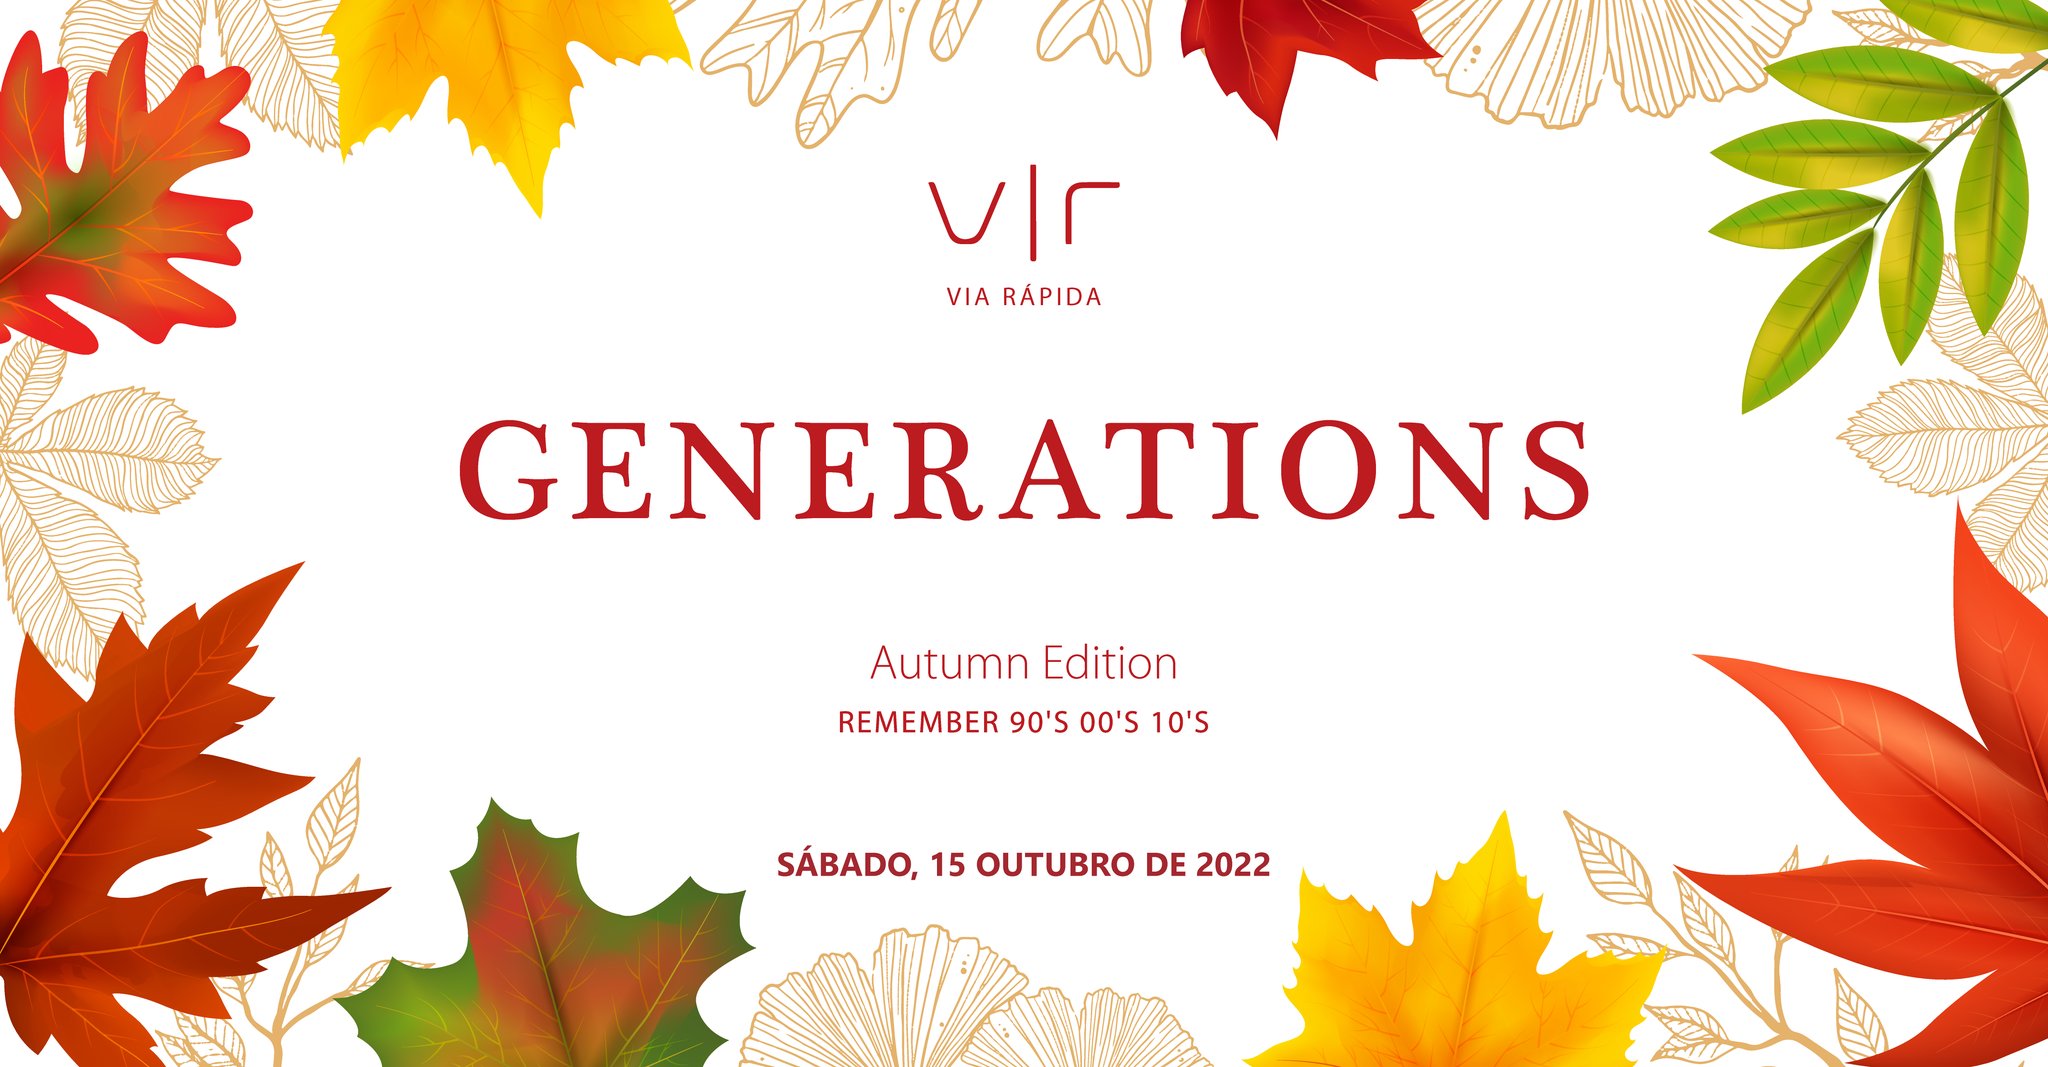 GENERATIONS Autumn Edition 2022 - Via Rápida